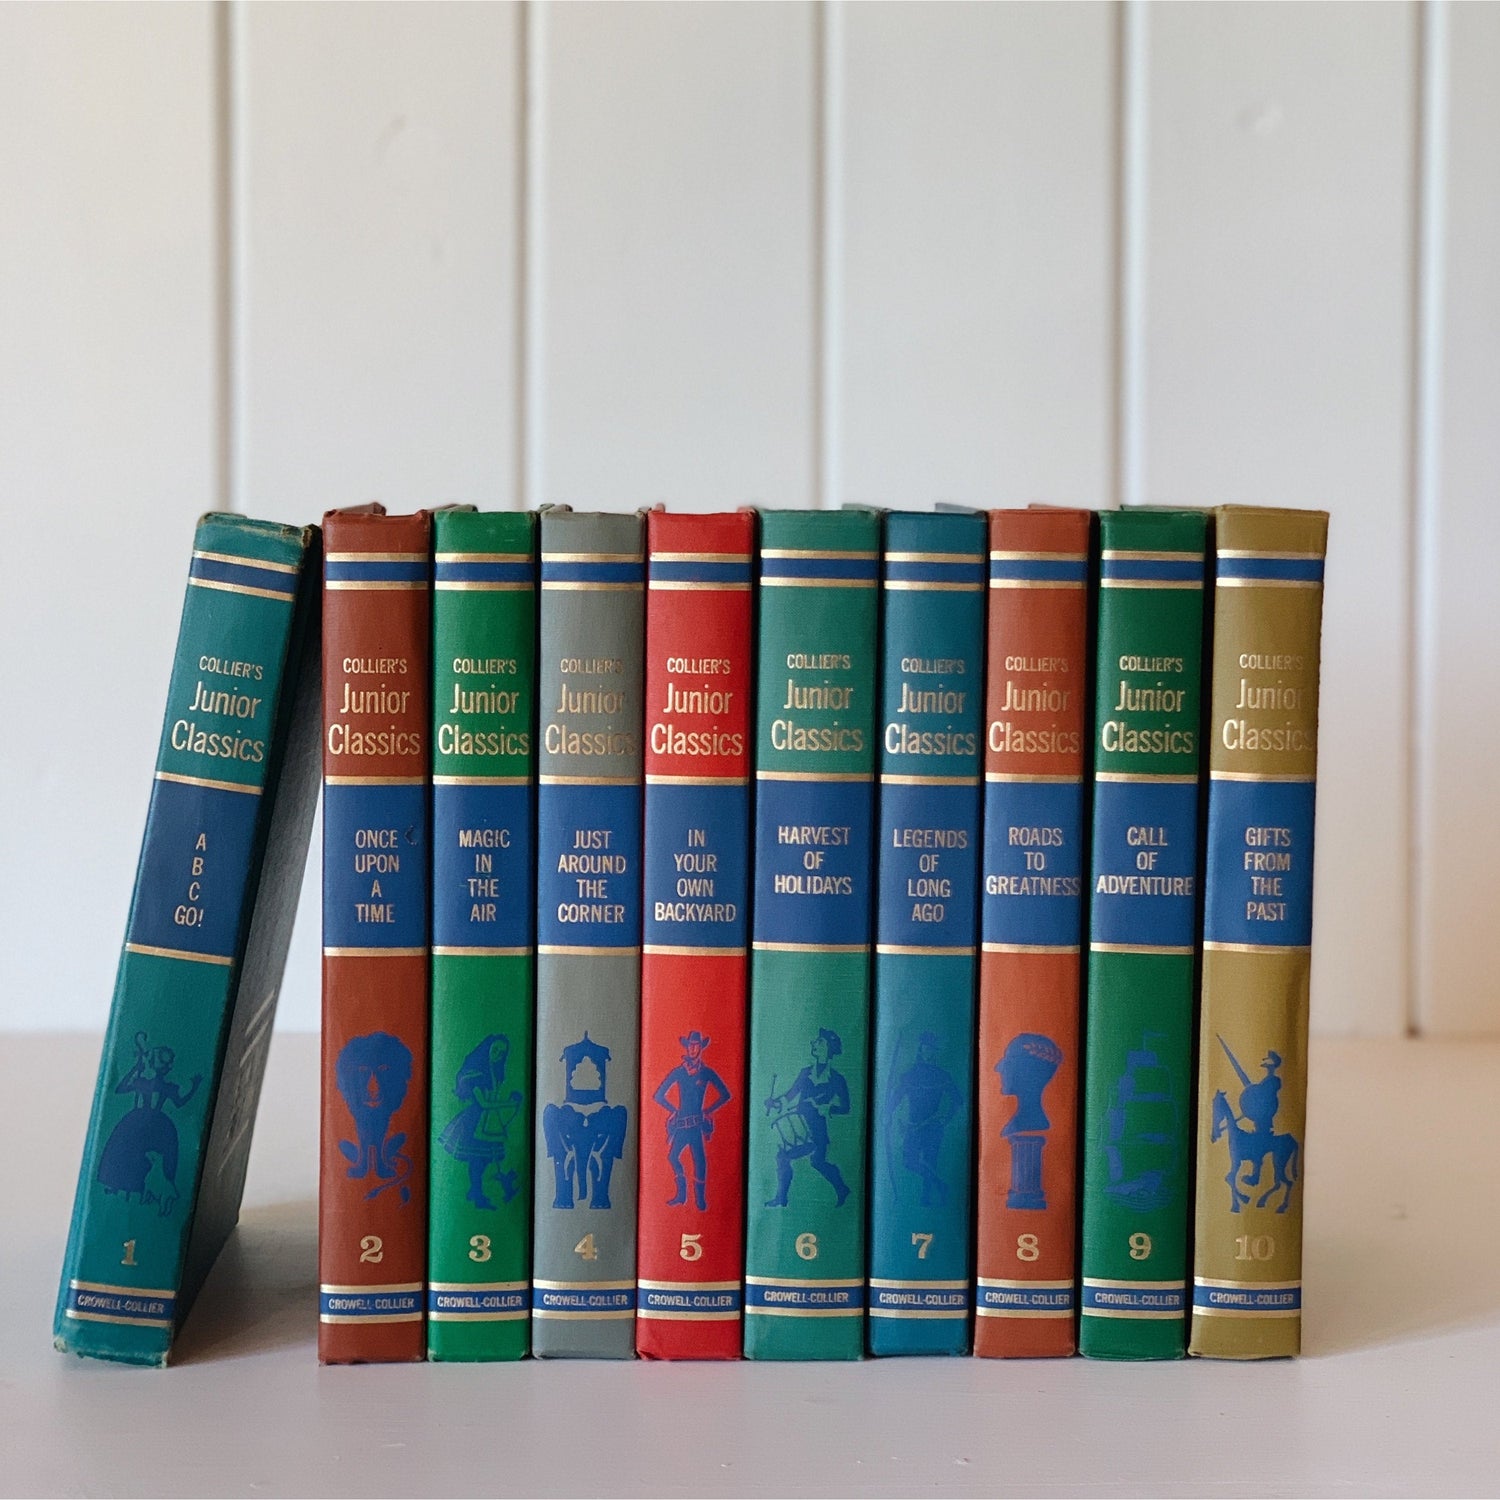 Collier's Junior Classics Set, Vintage 1962 Rainbow Book Set for Decor, Playroom Decor, Mid-Century Decor